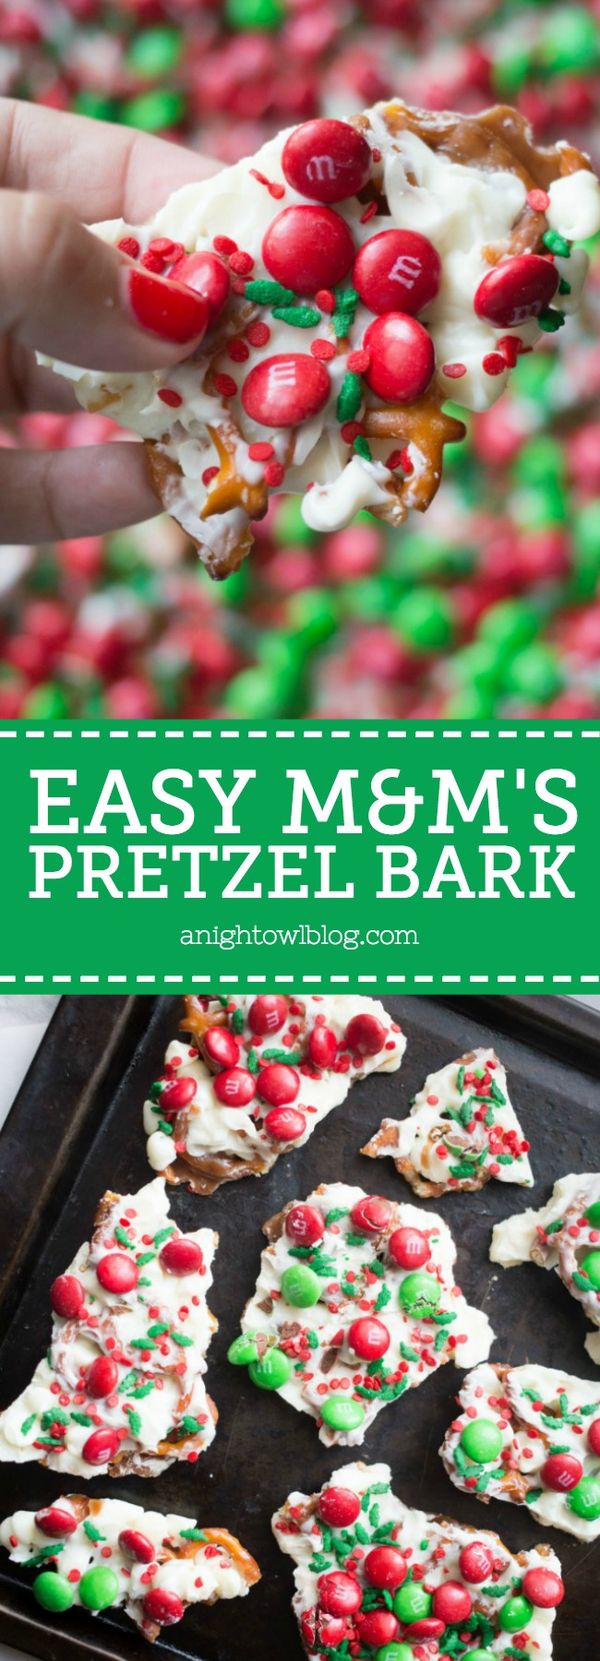 M&M'S Pretzel Bark